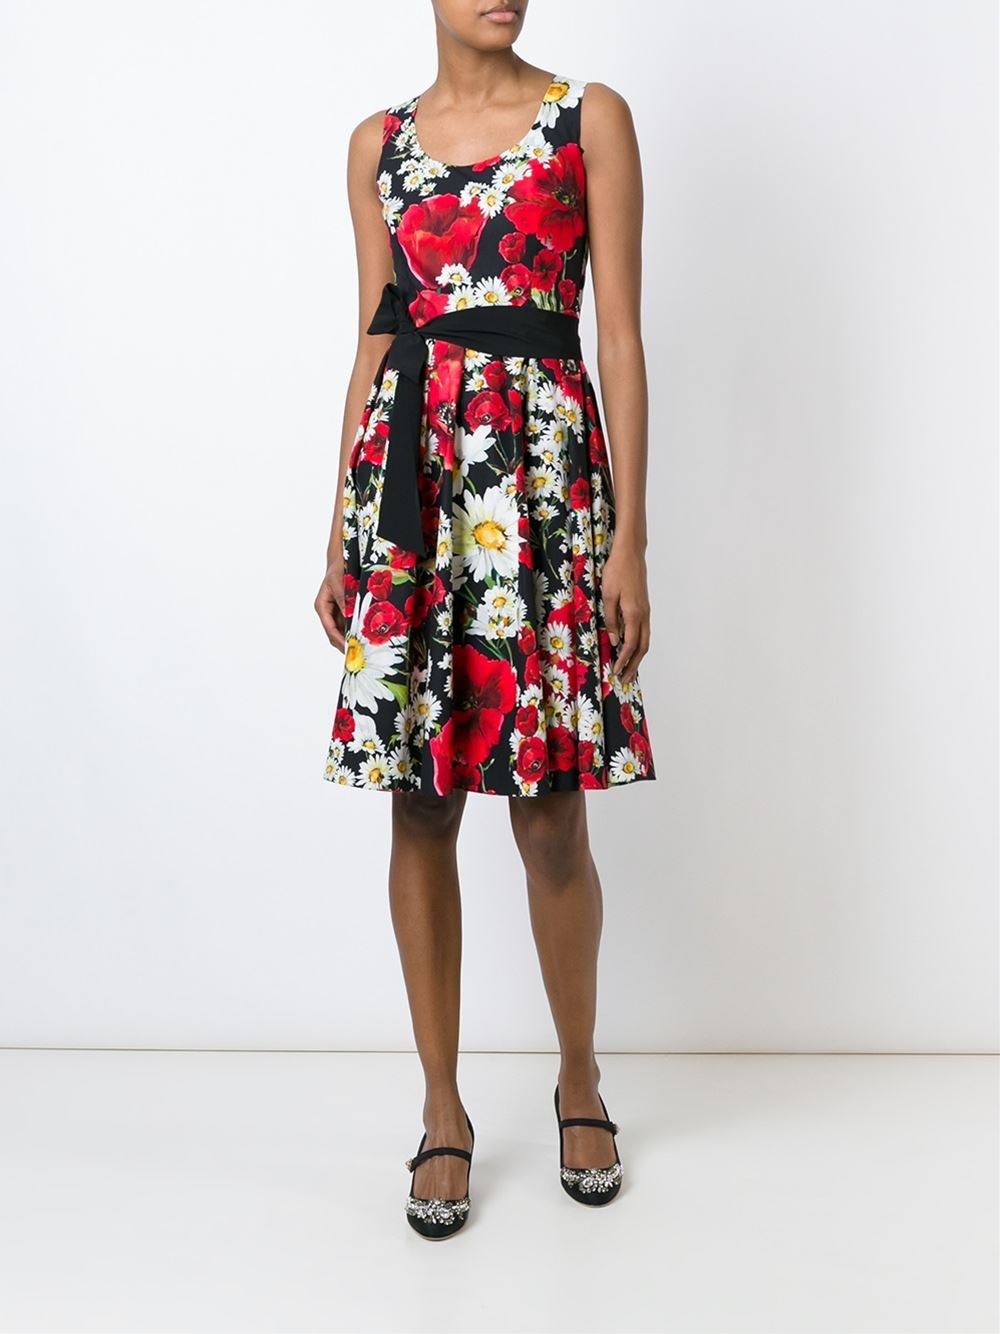 Lyst - Dolce & Gabbana Floral Print Dress